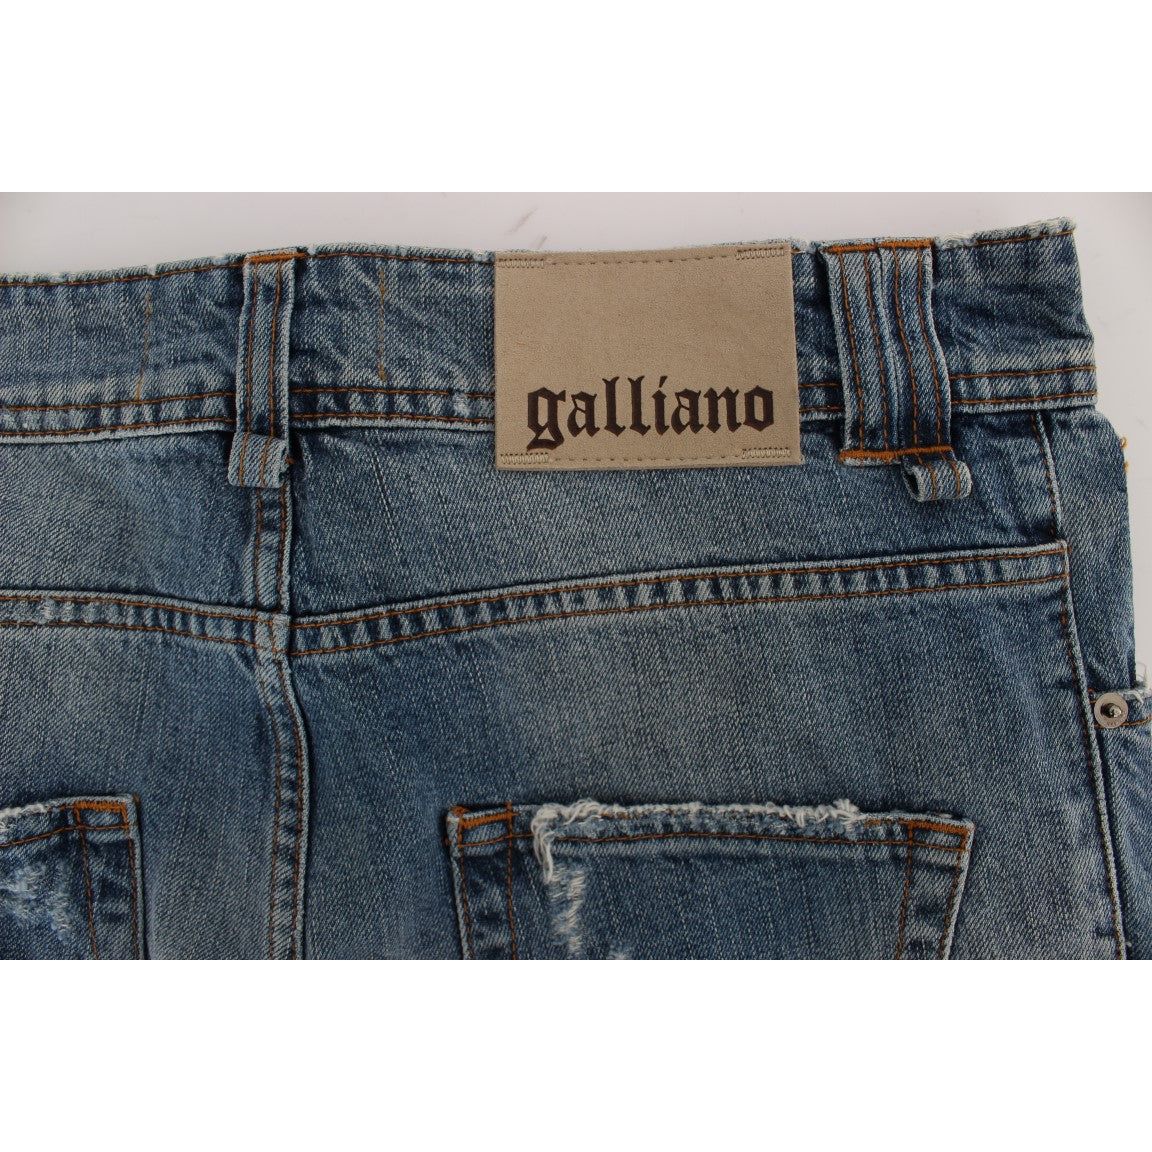 John Galliano Chic Boyfriend Blue Wash Jeans blue-wash-cotton-boyfriend-fit-cropped-jeans-1